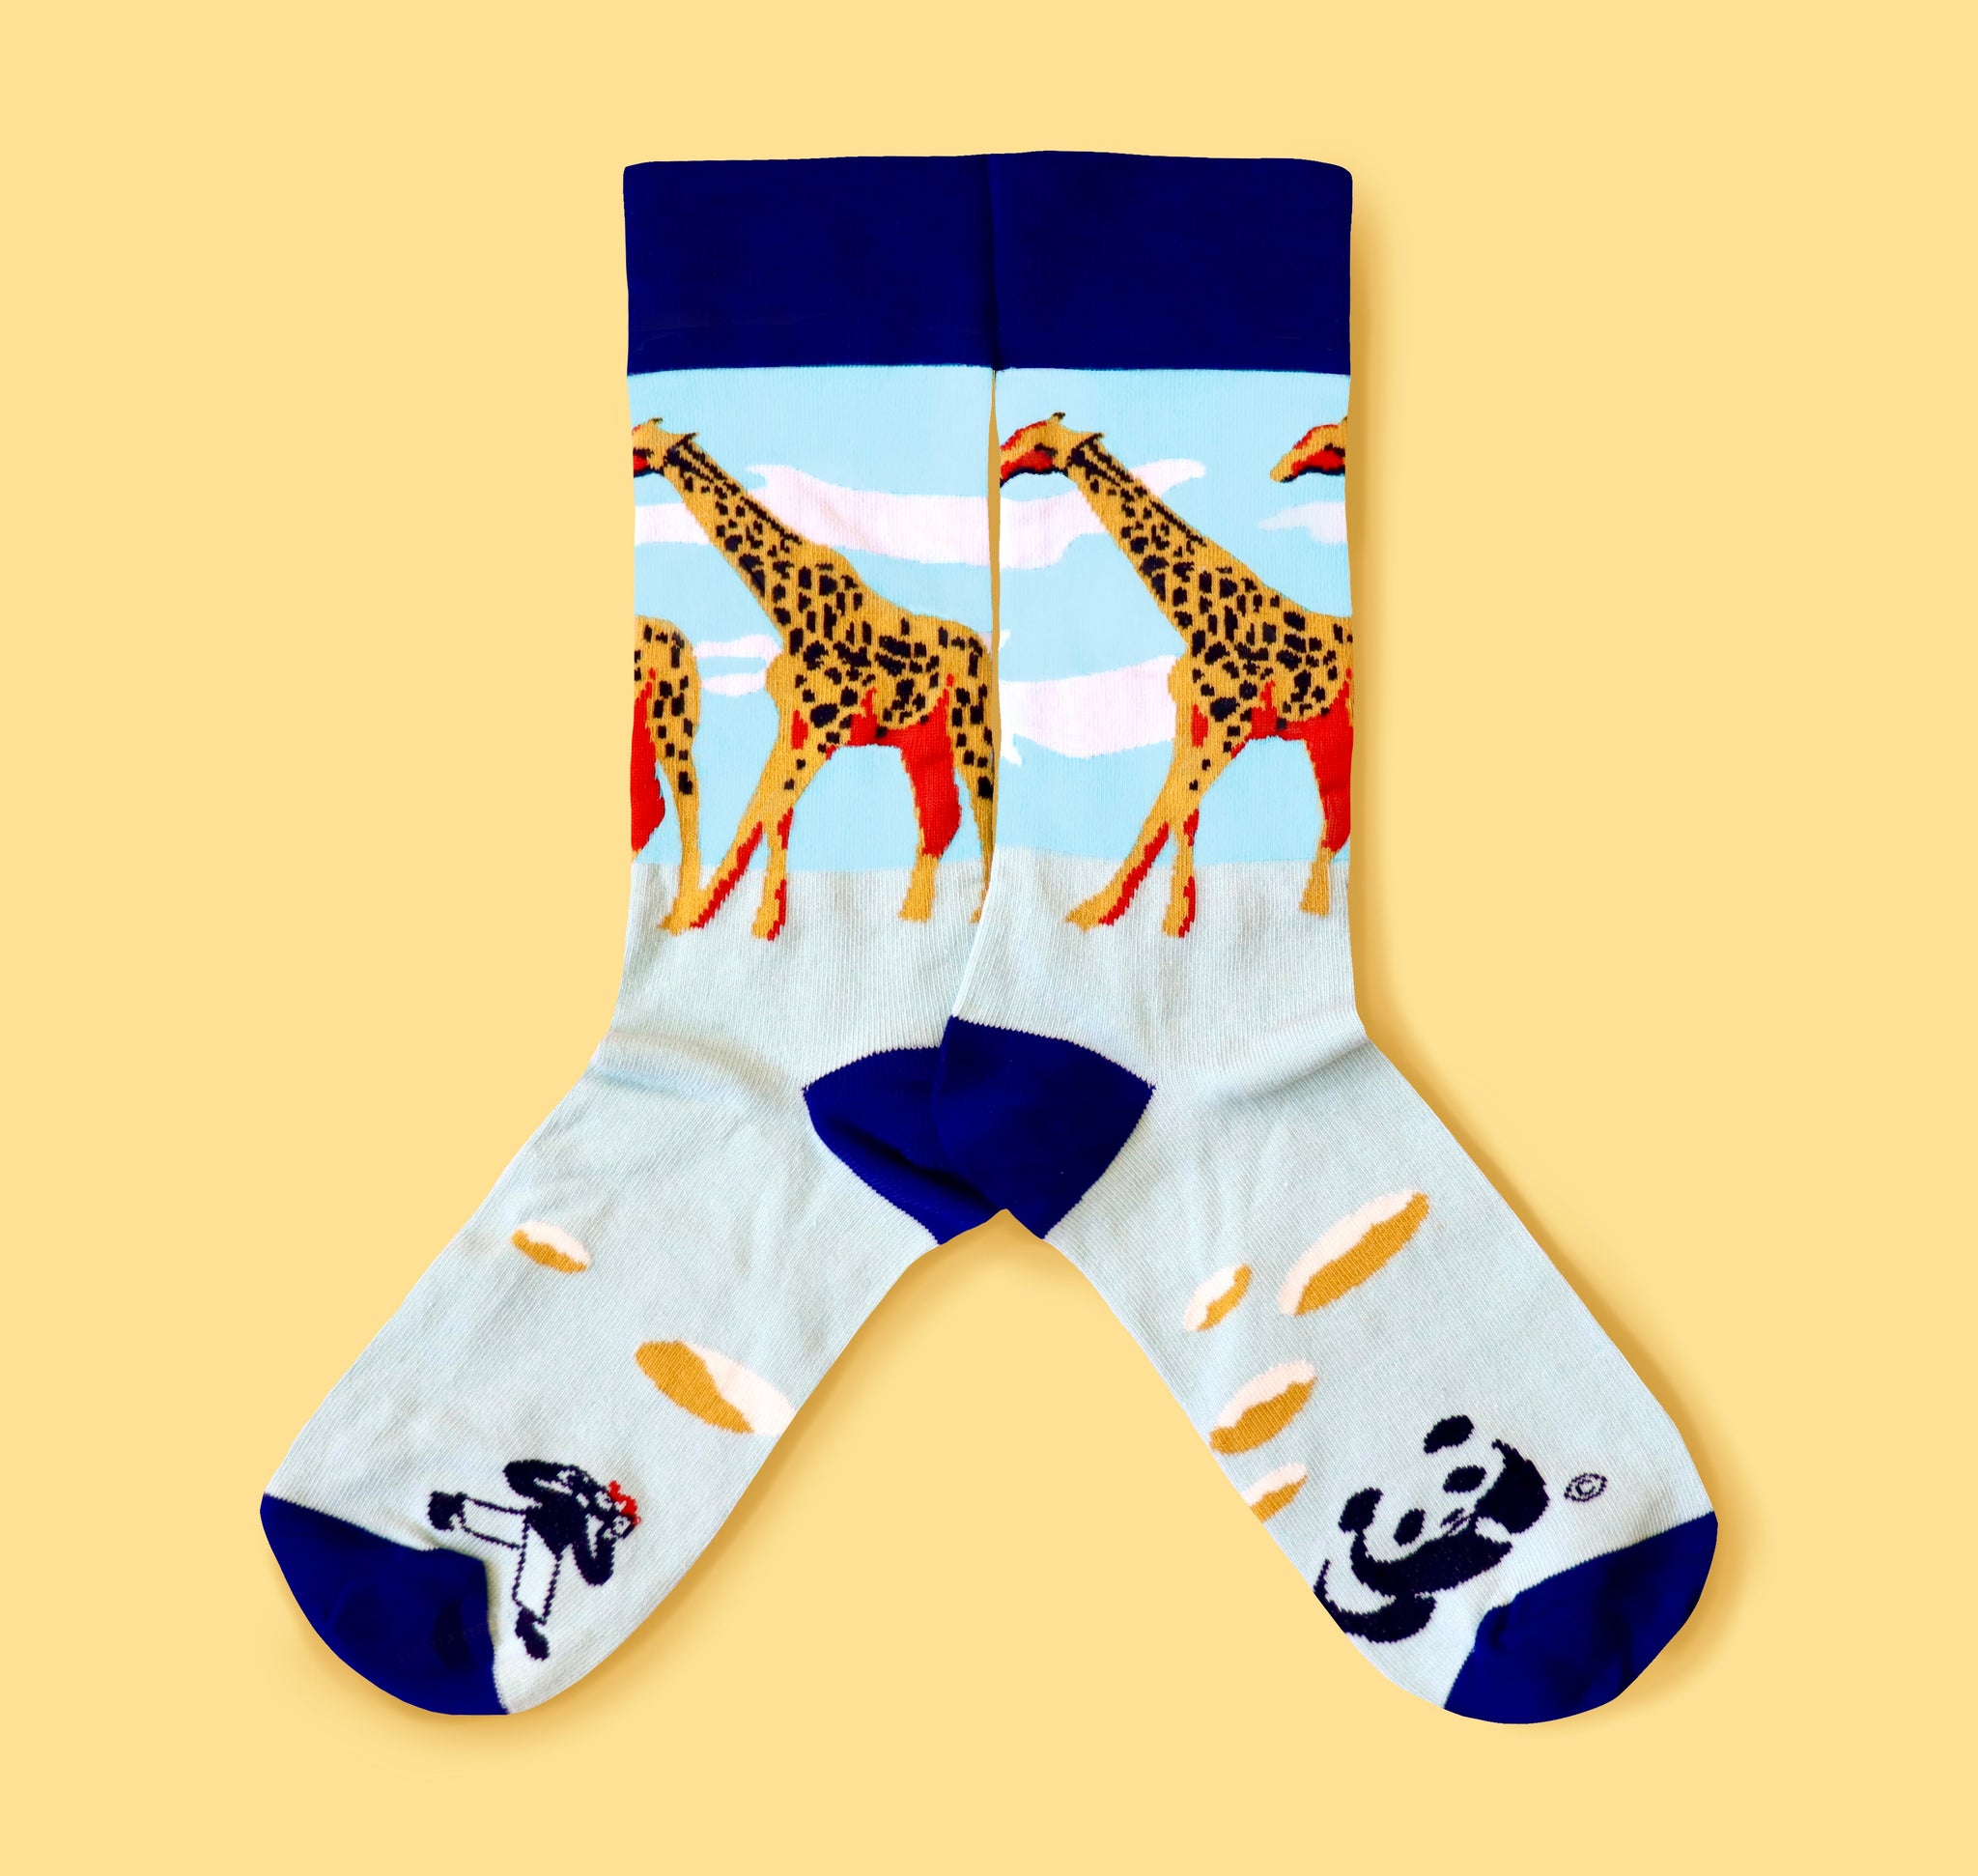 FEAT. sock co.'s Sauntering giraffes socks